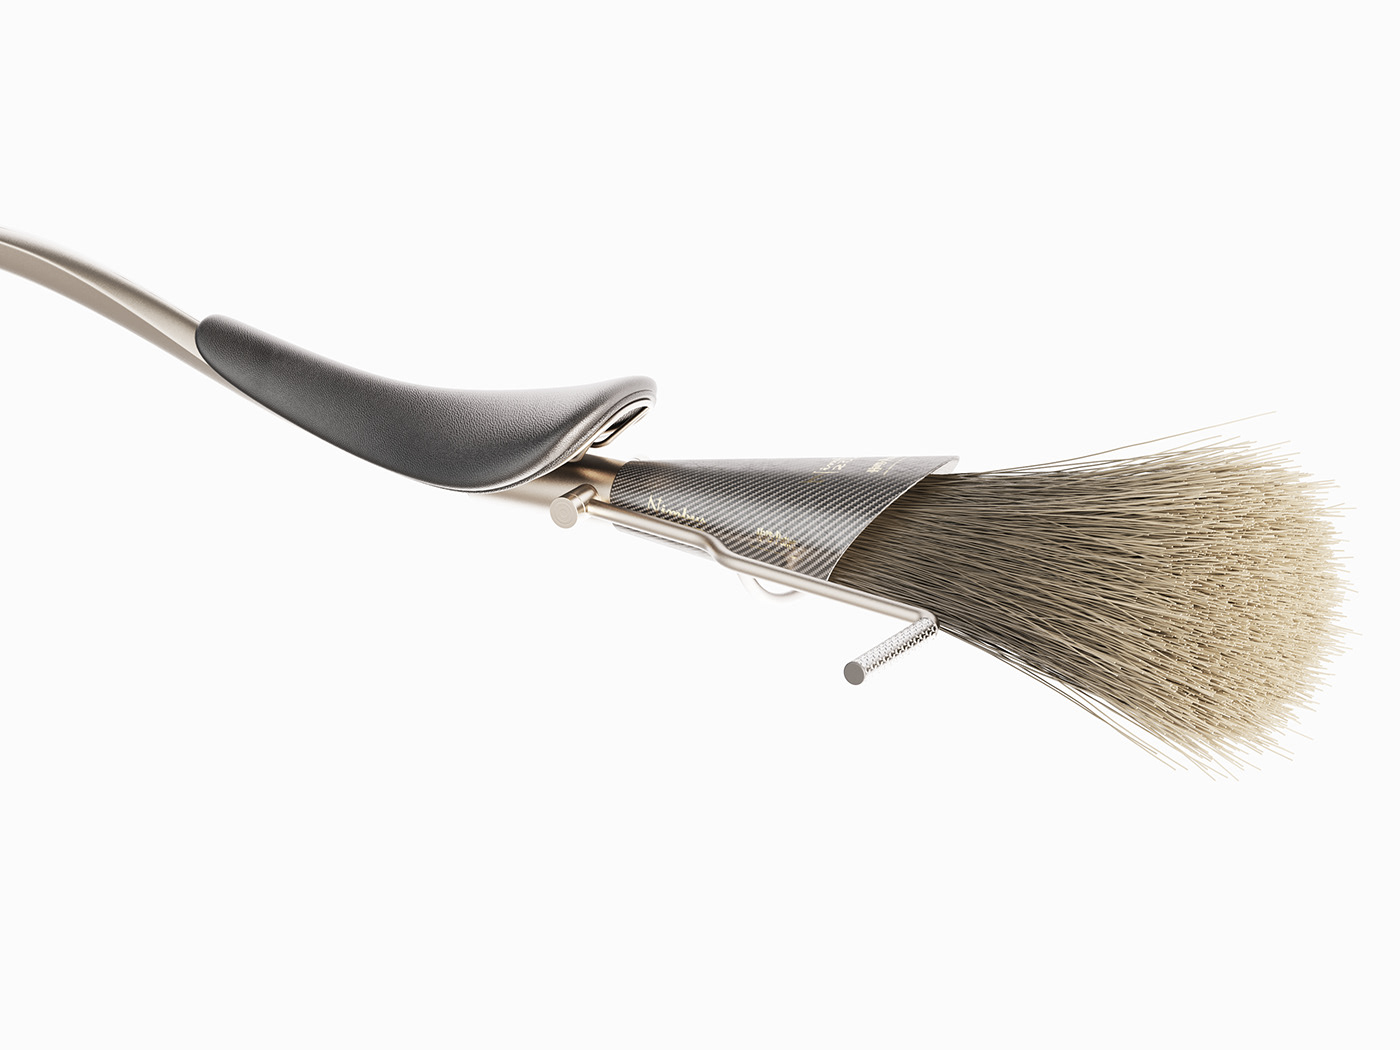 2022 design Broom broomstick fantasy harry potter industrial design  keyshot Magic   quidditch Rhino